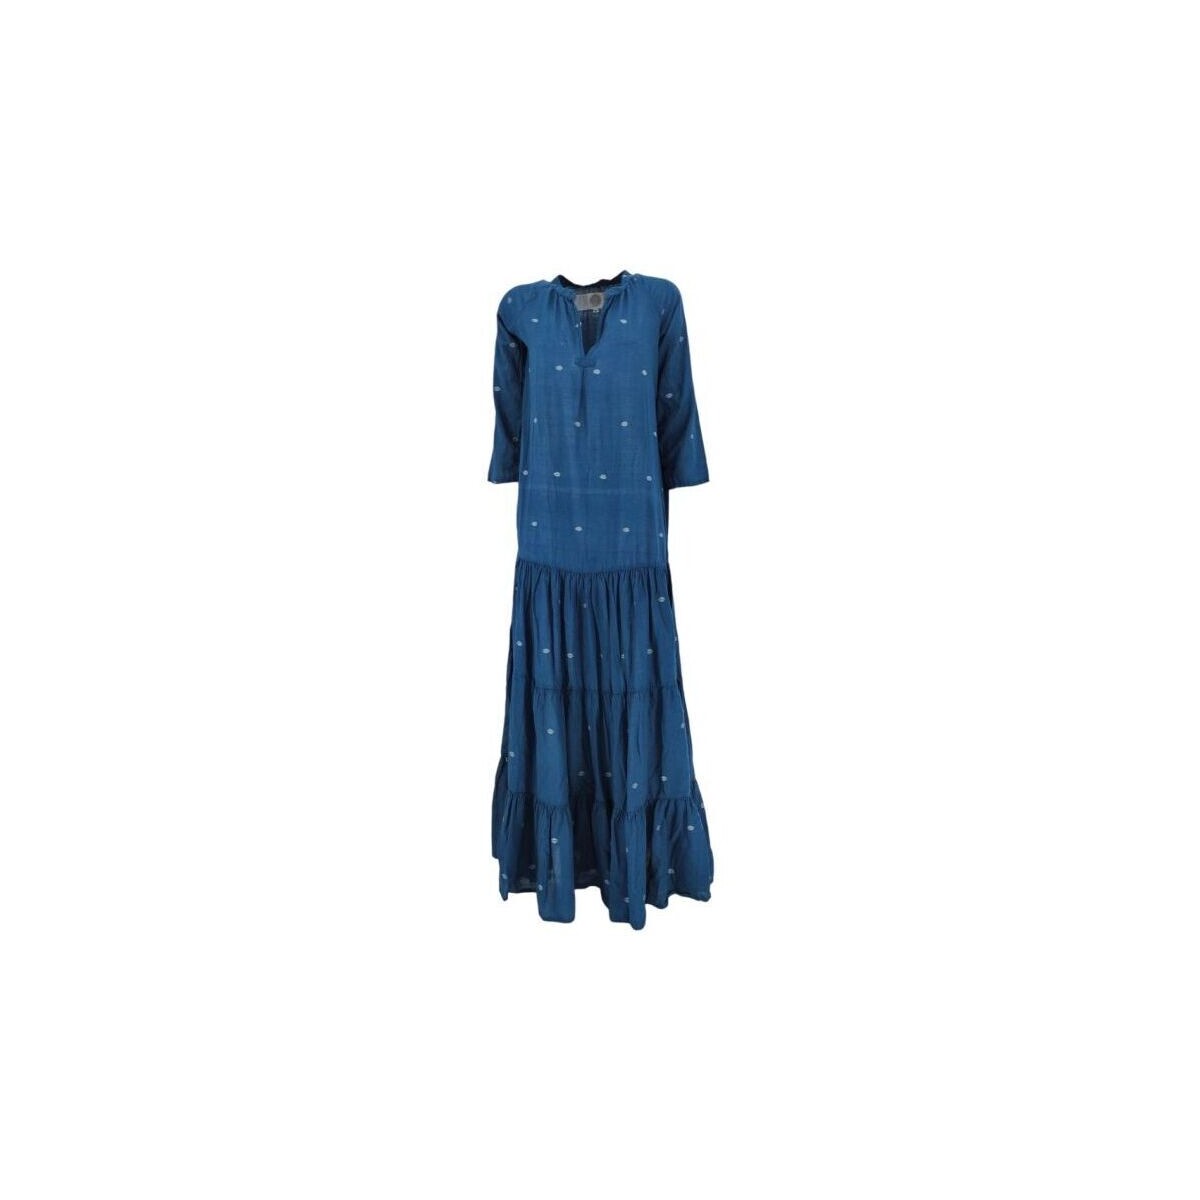 Vêtements Femme Robes Bsbee Robe Monroe Long Femme Indigo Bleu